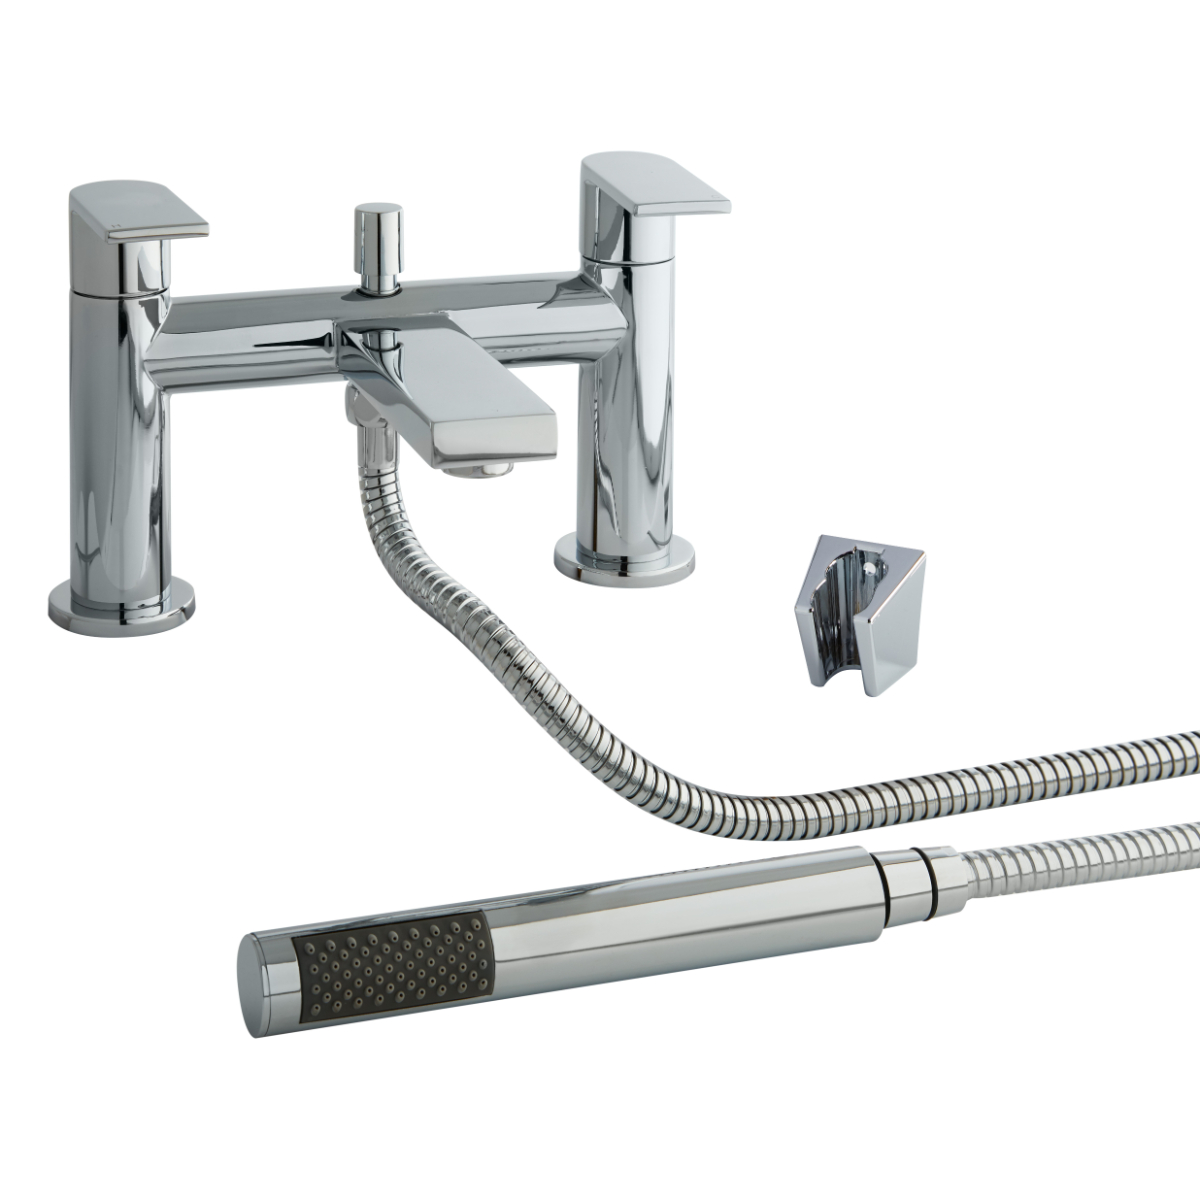 Bruar Chrome Bath Tap Shower Mixer And Shower Kit